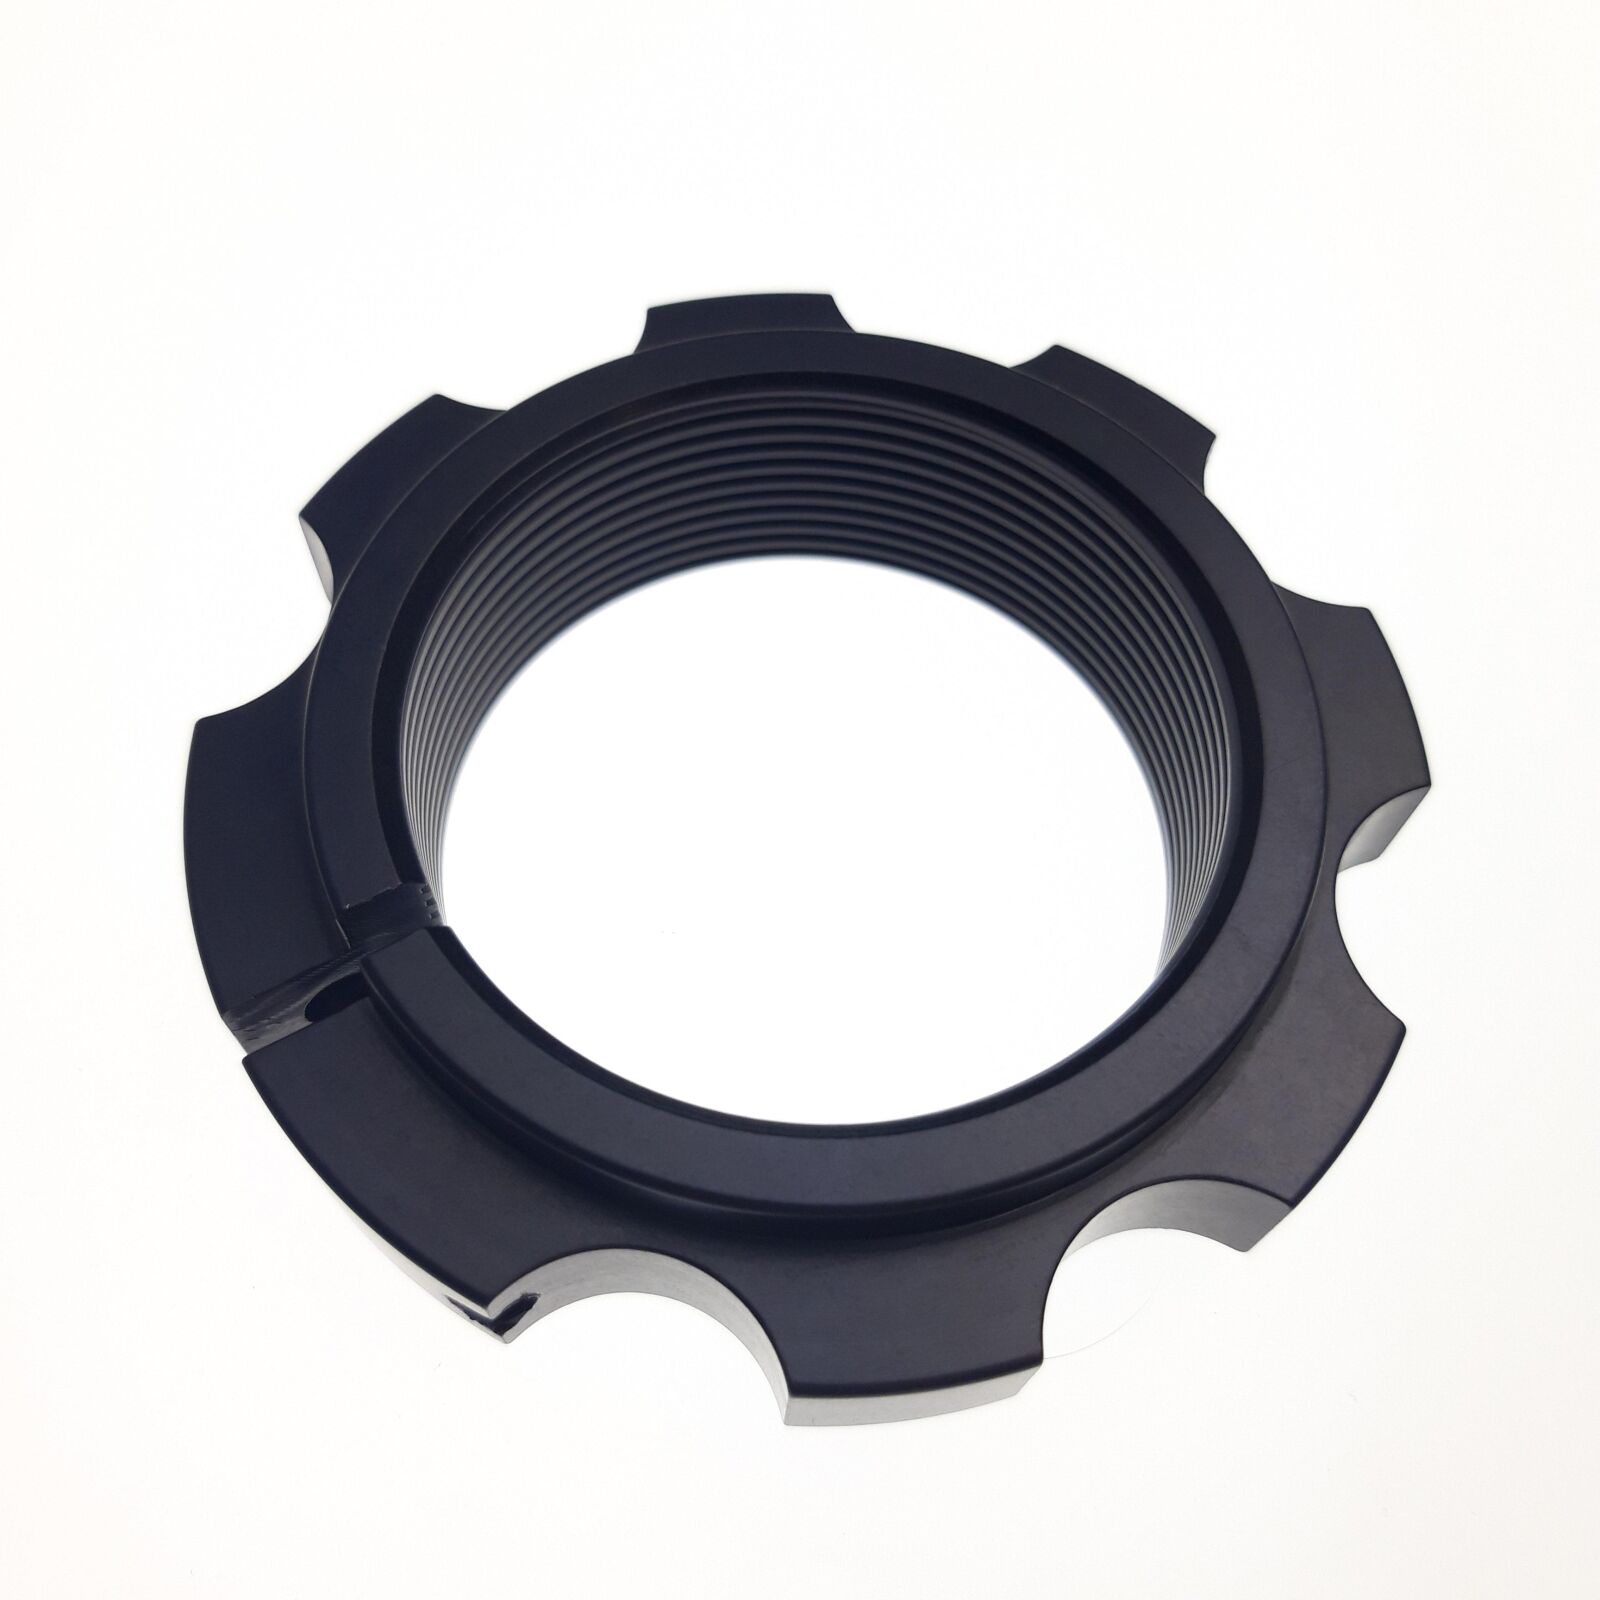 Obrázek produktu Spring Hardware: Preolad Ring (2.25 ID and 2.50 ID Spring) Clamp Design, AL 6061, Black (234-00-154) 234-00-154